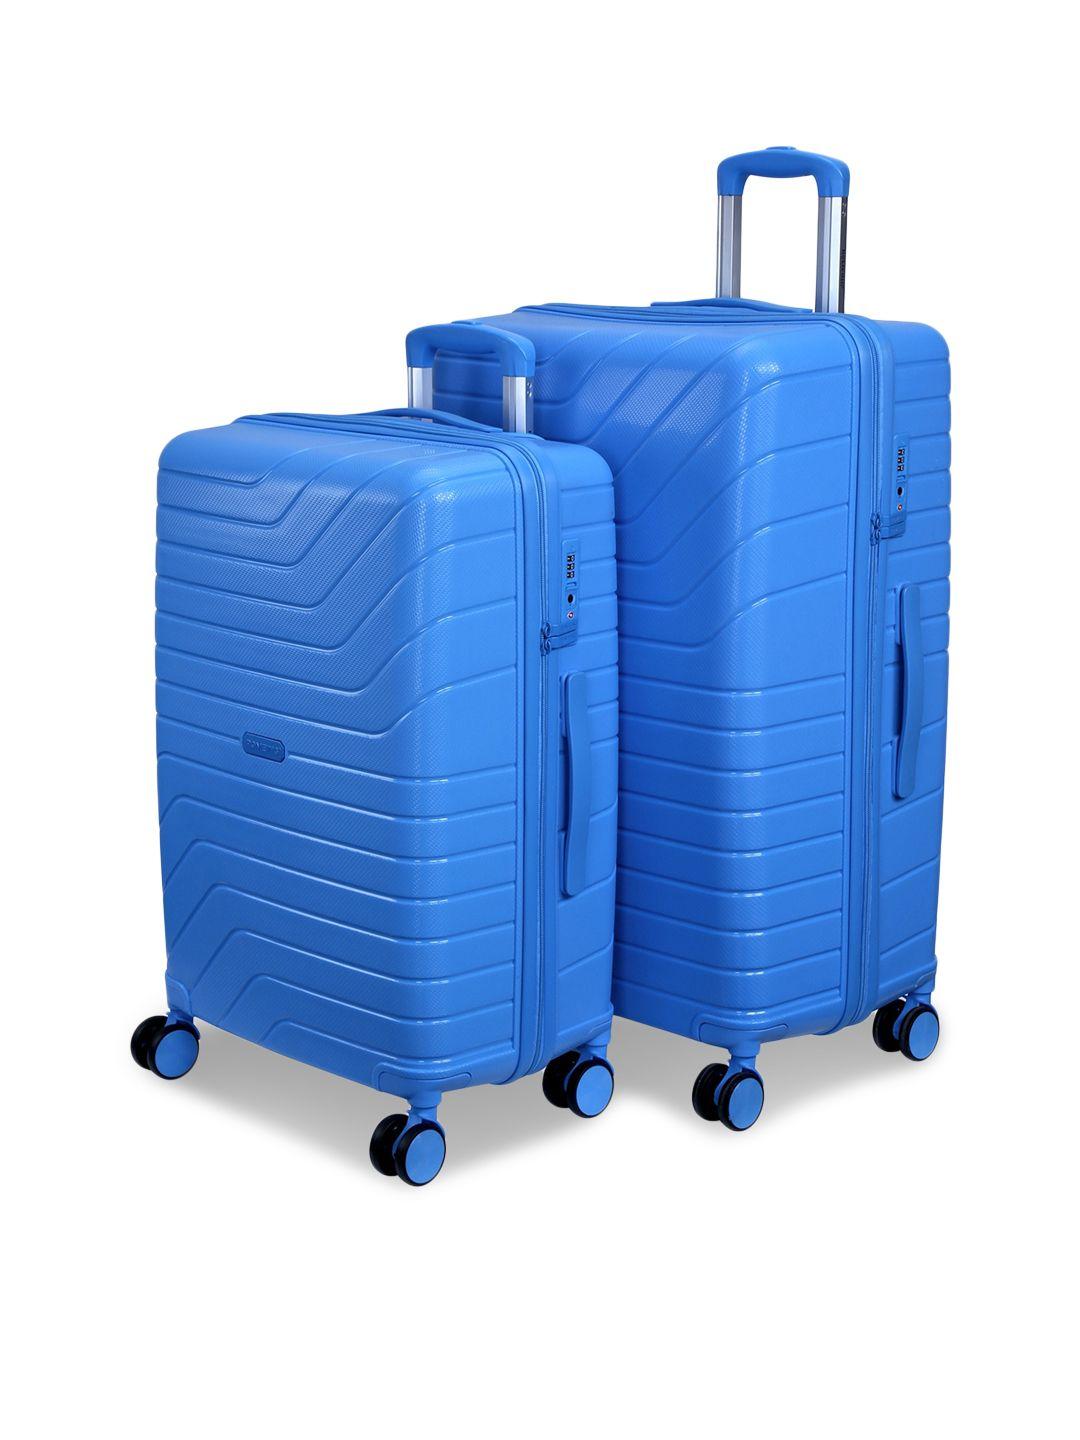 romeing tuscany blue set of 2 polypropylene trolley suitcase